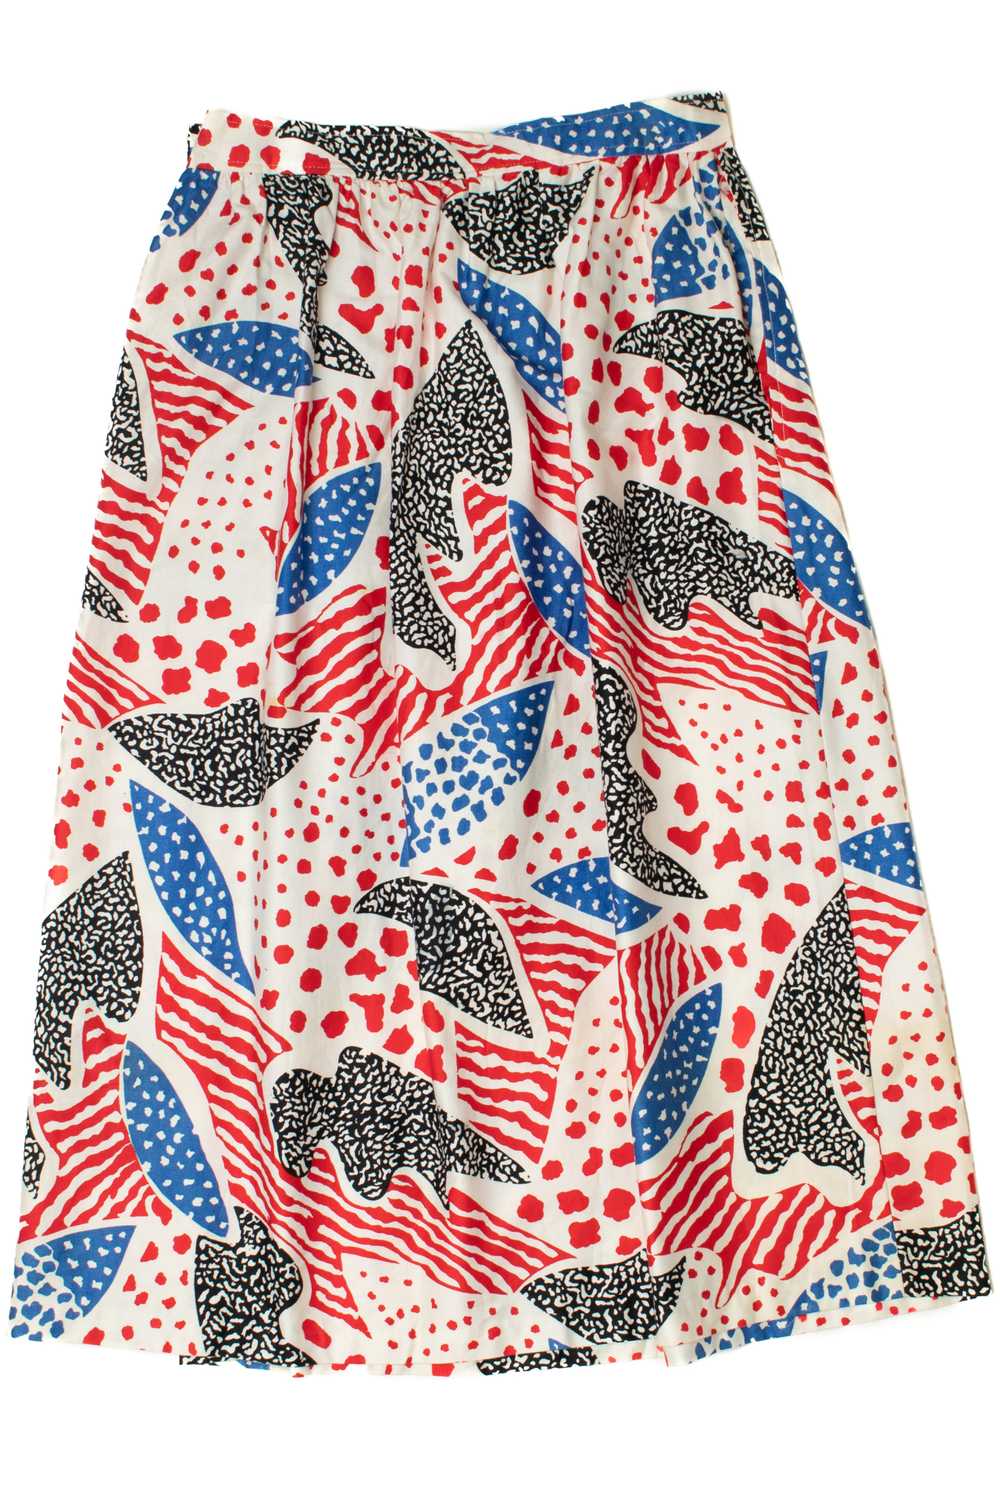 Vintage Red White & Blue Maxi Skirt - image 2